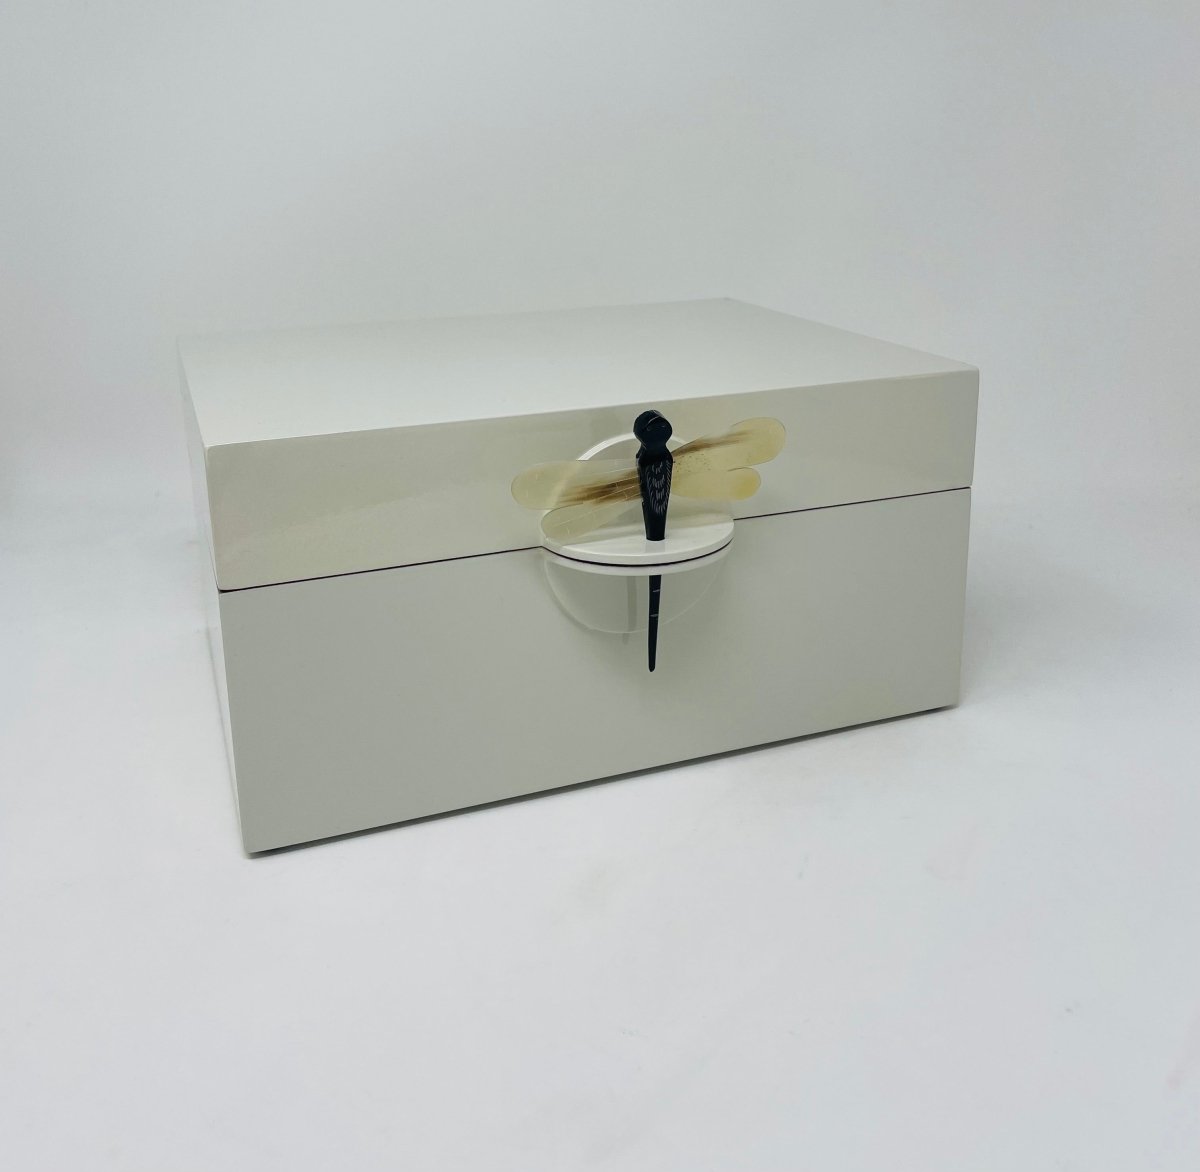 Box with Dragonfly XL - Homebody Denver